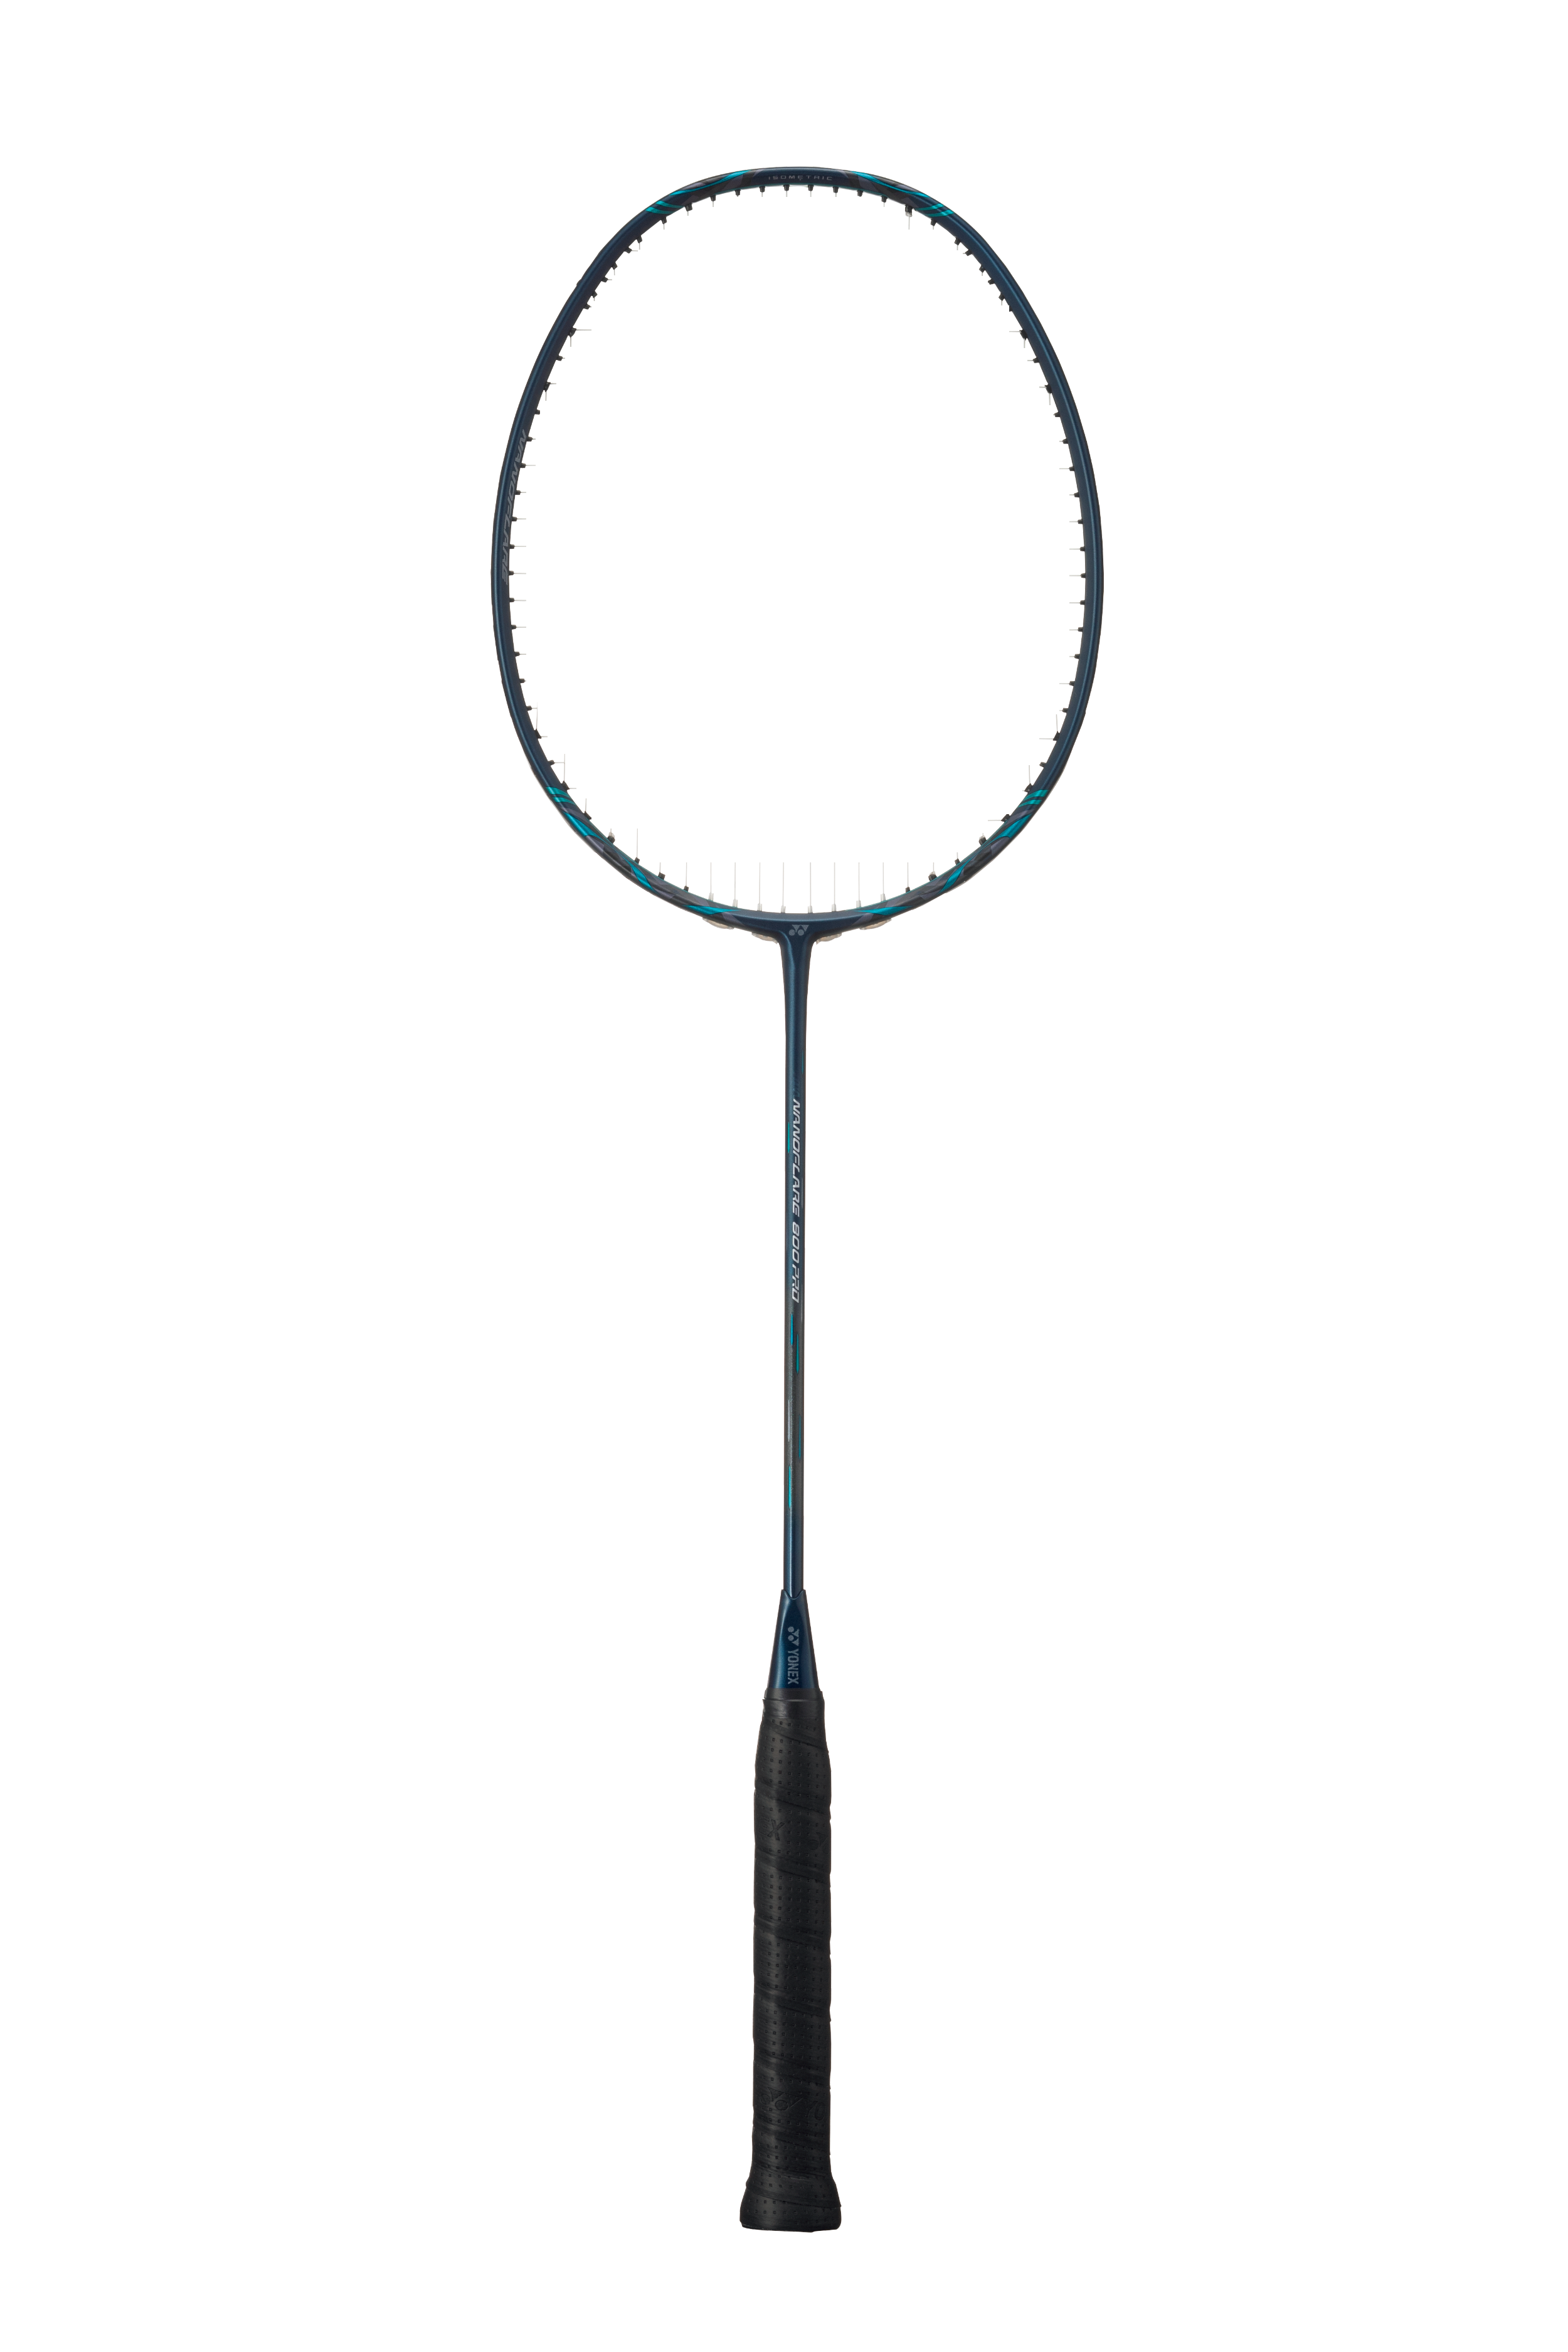 YONEX Nanoflare 800 PRO Badminton Racket - NF800P - Deep Green - Frame only